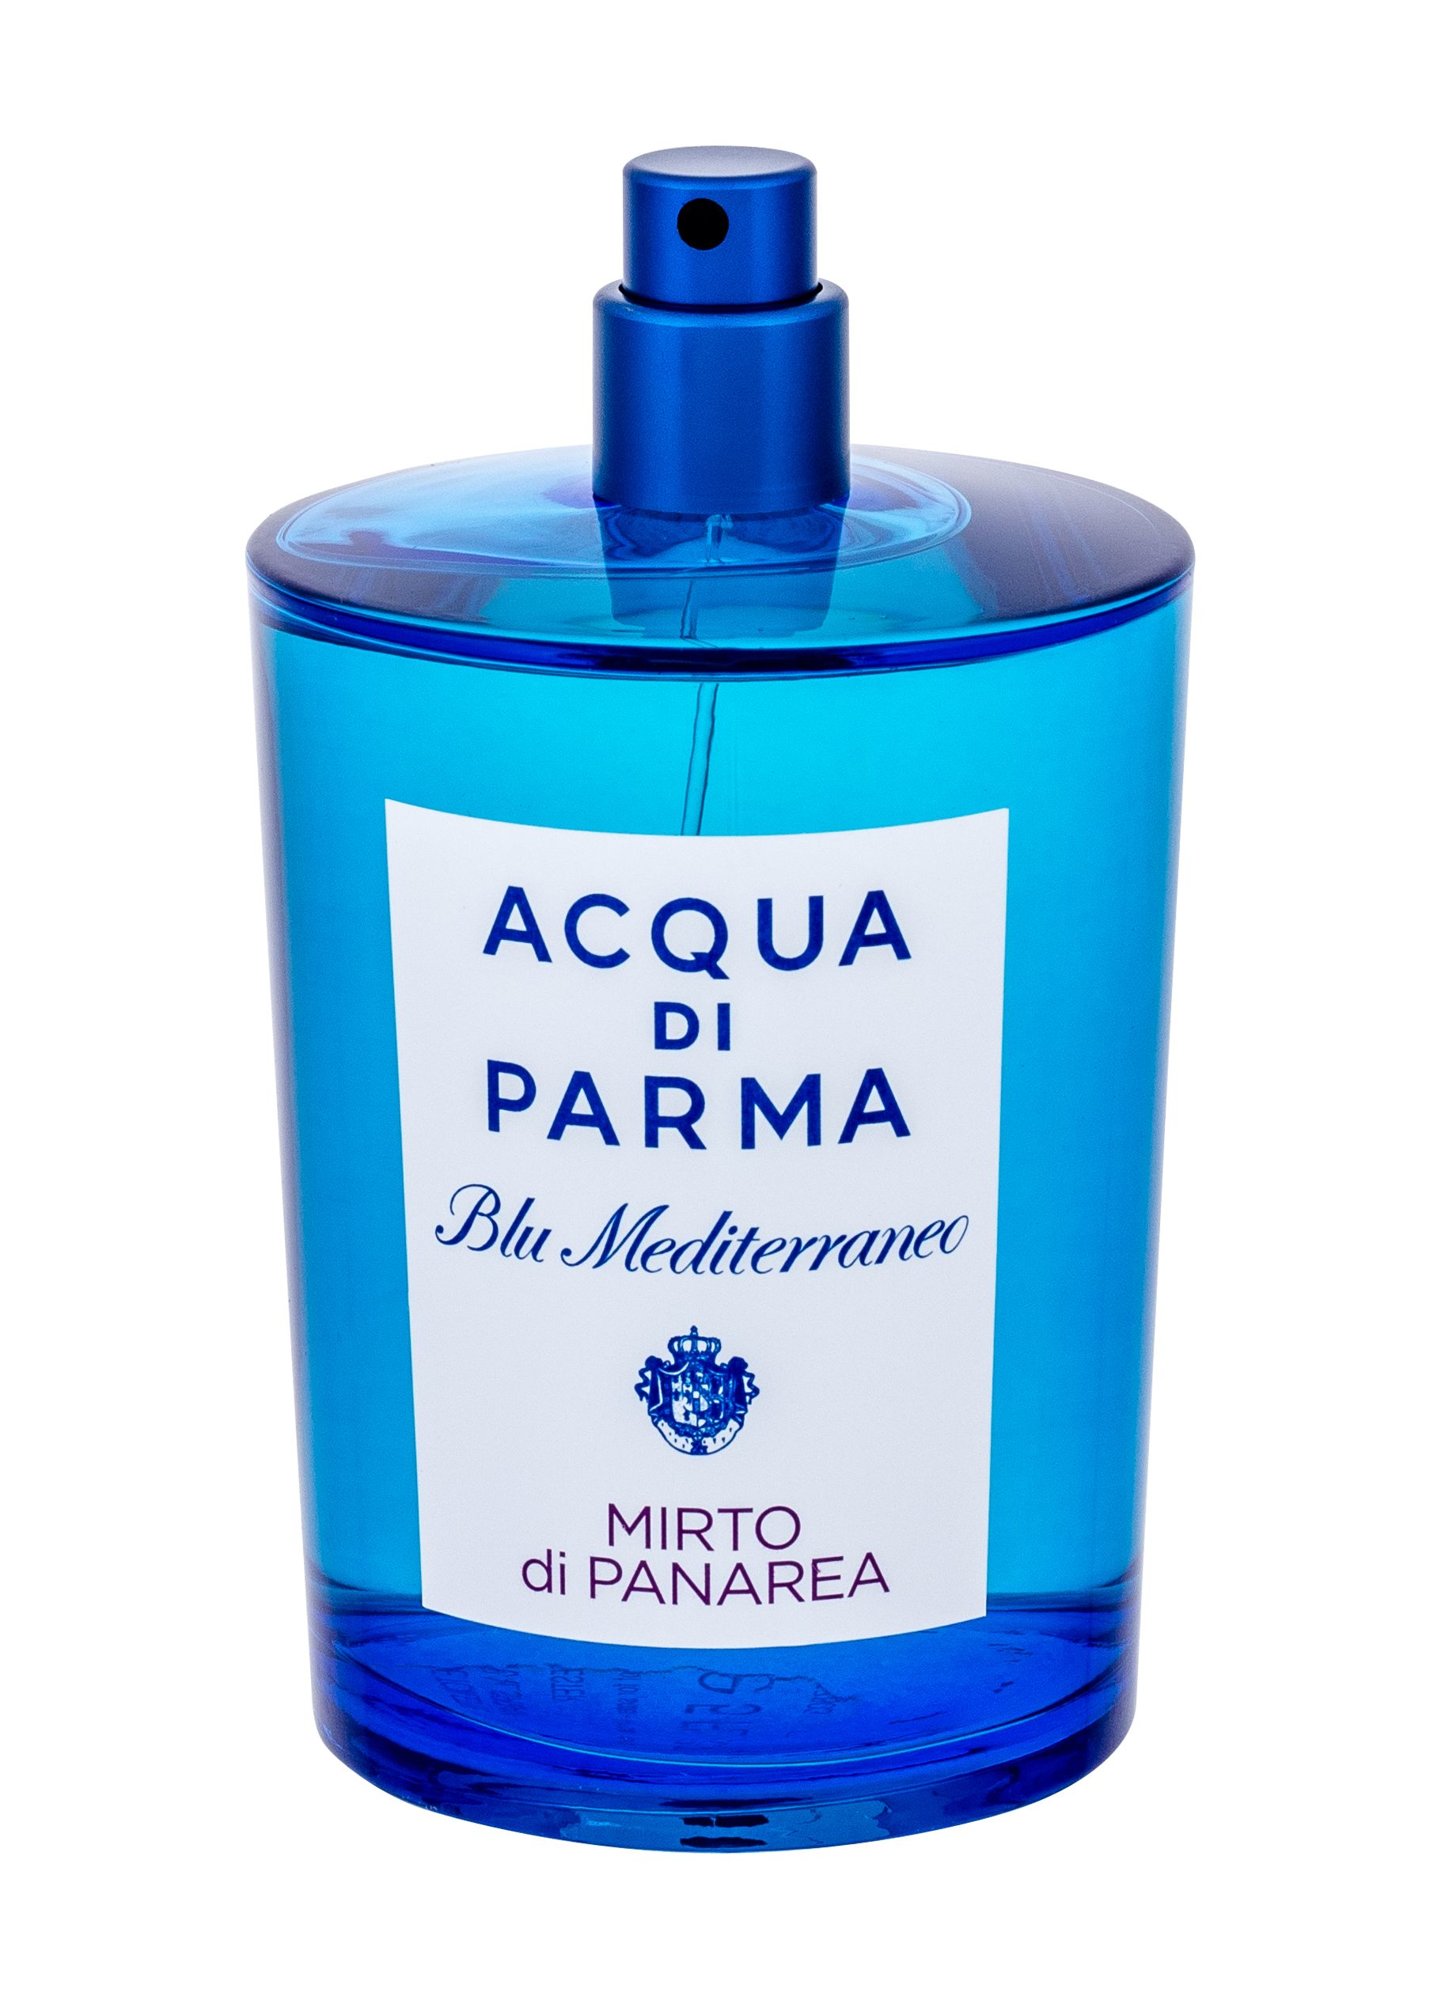 Acqua di Parma Blu Mediterraneo Mirto di Panarea, Toaletní voda 150ml, Tester